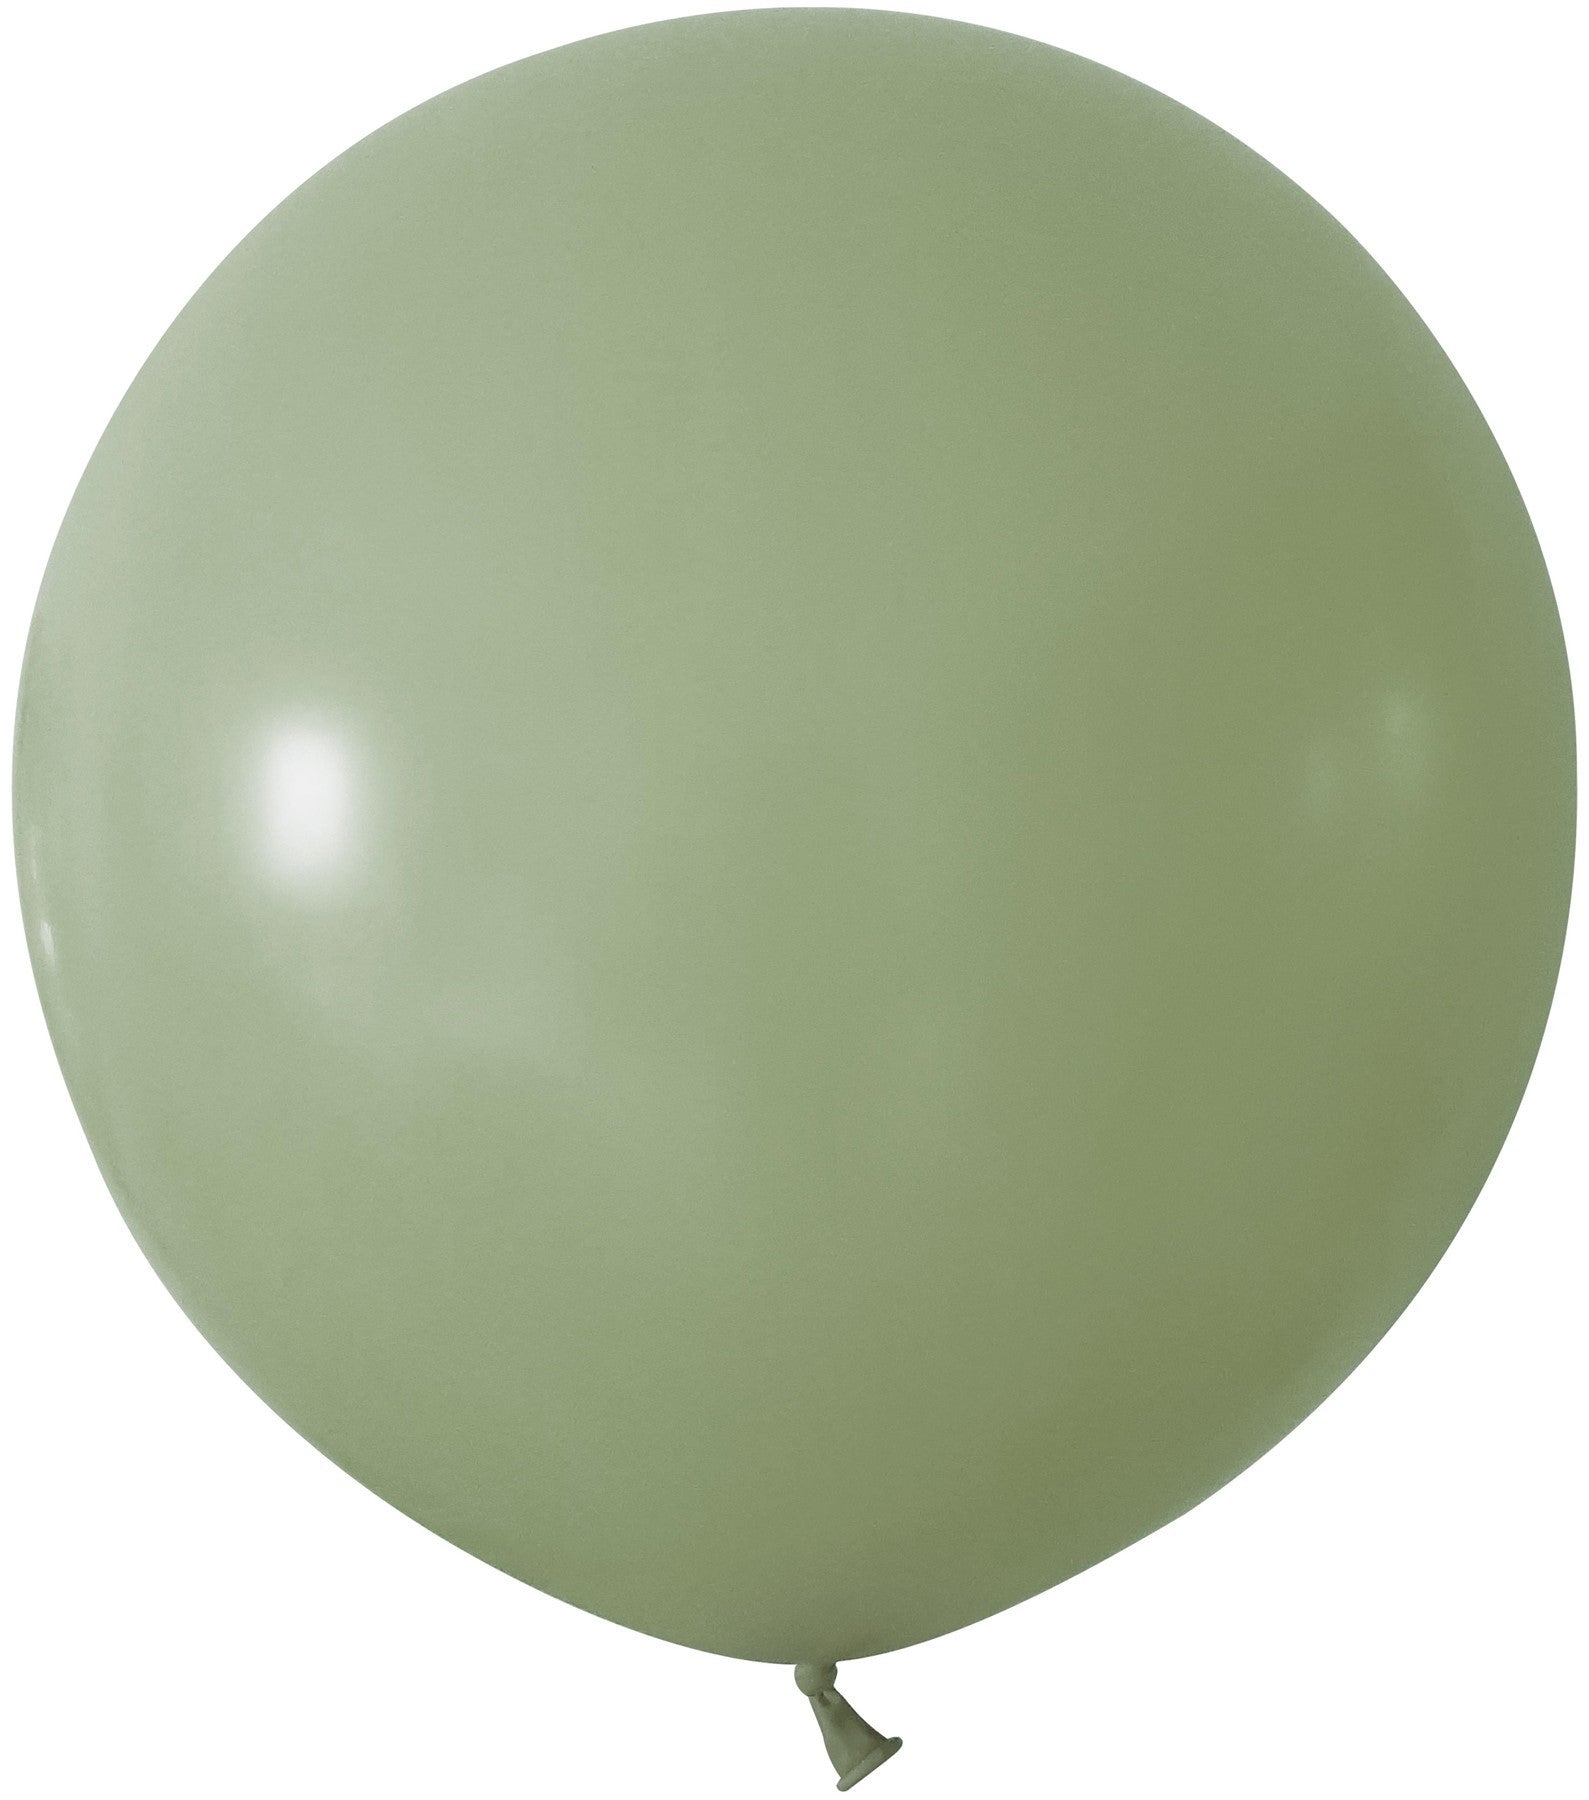 View Sage Green Jumbo Latex Balloon 24 inch Pk 3 information